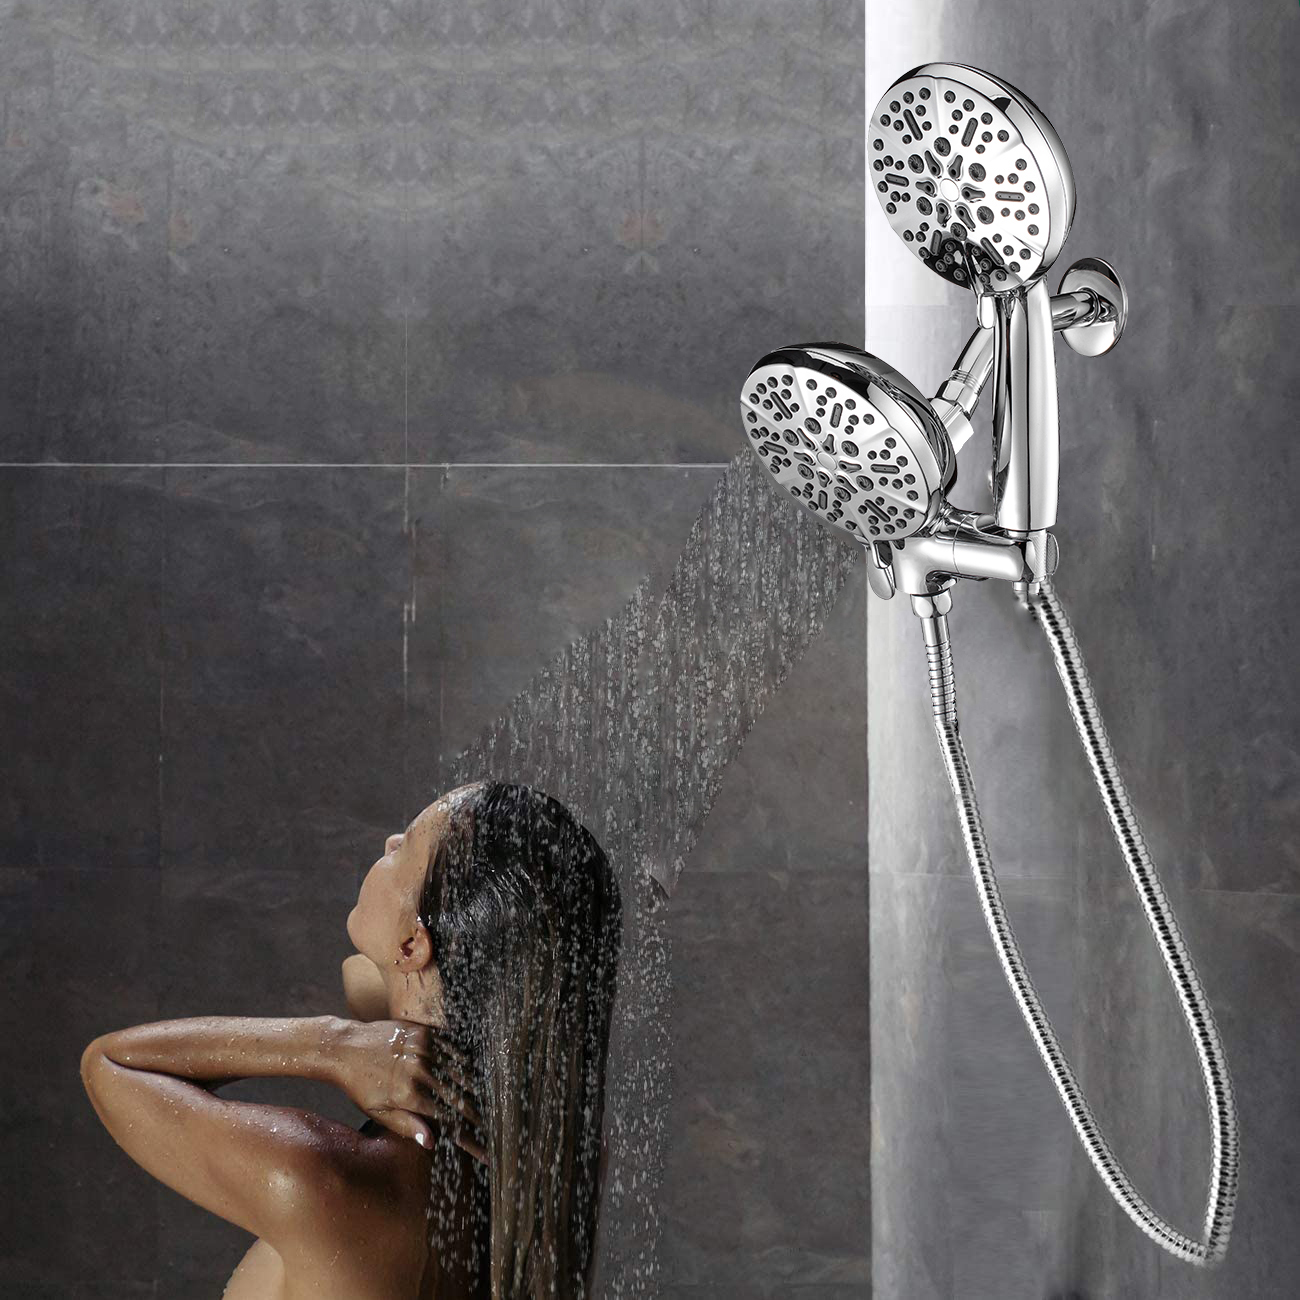 High Pressure Chrome 7 Functions Top Rainfall Rain Dual Shower Head Combo with Hand Held Shower